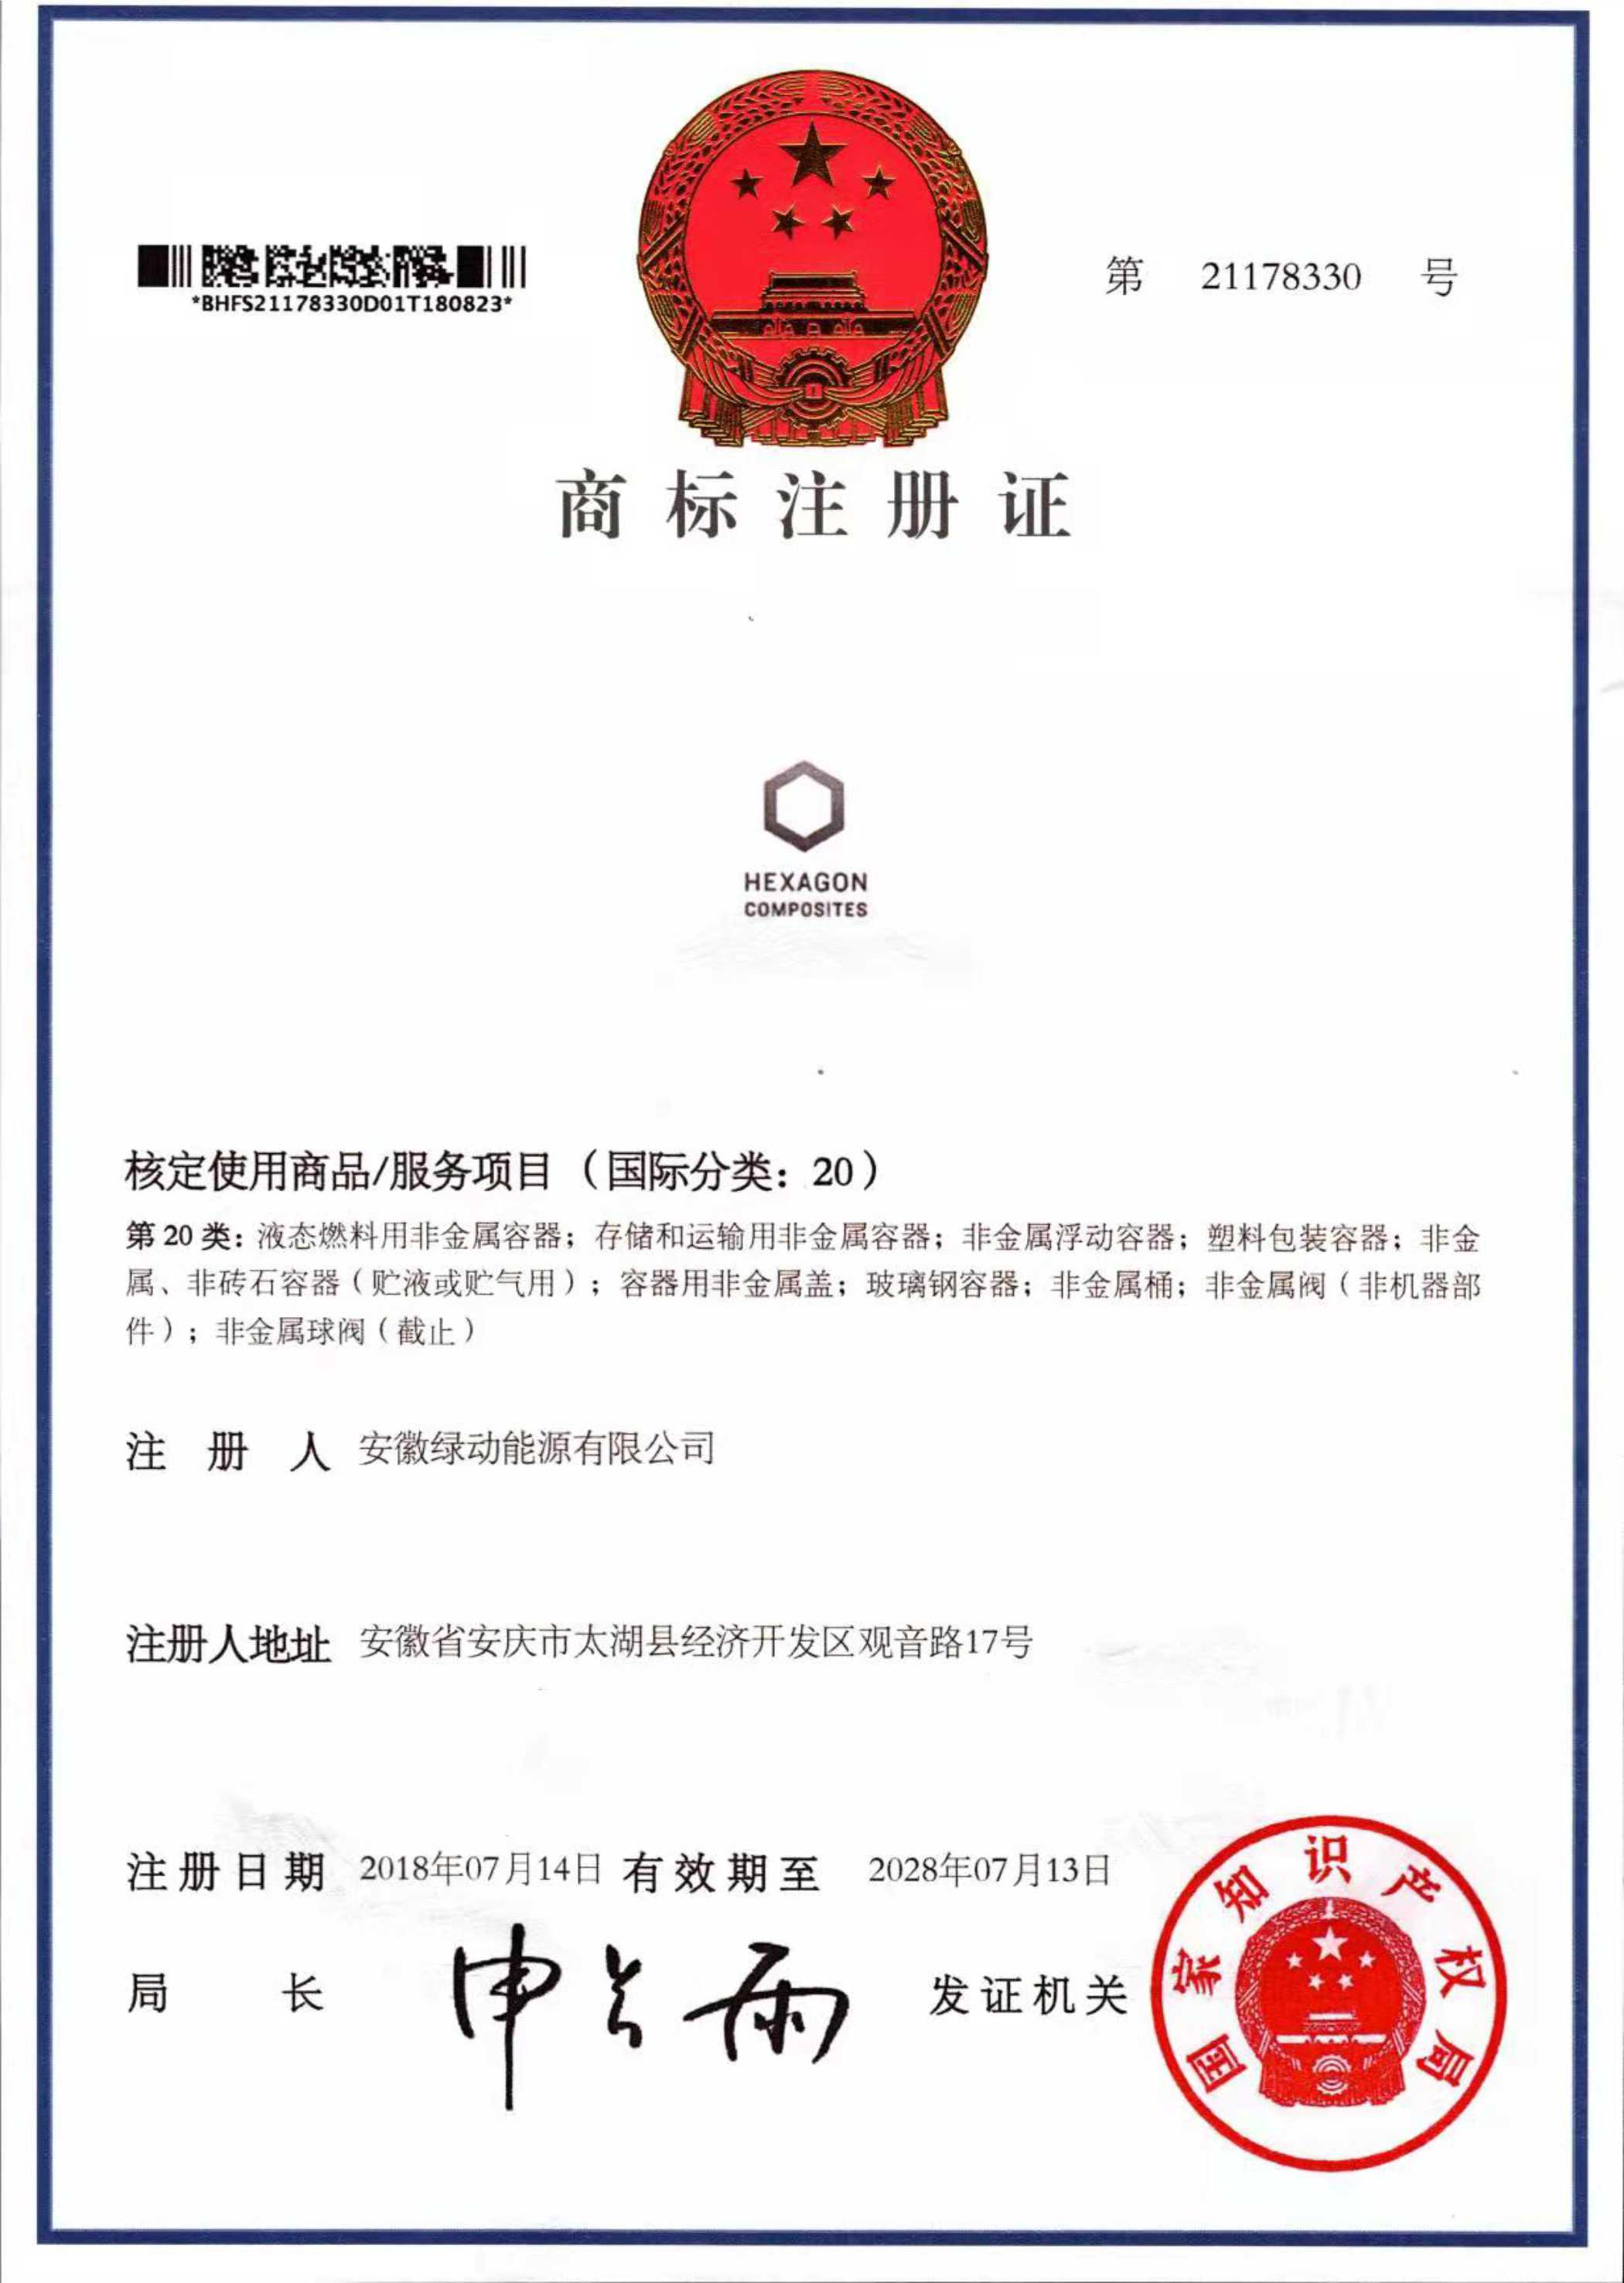 LPG-related certificates